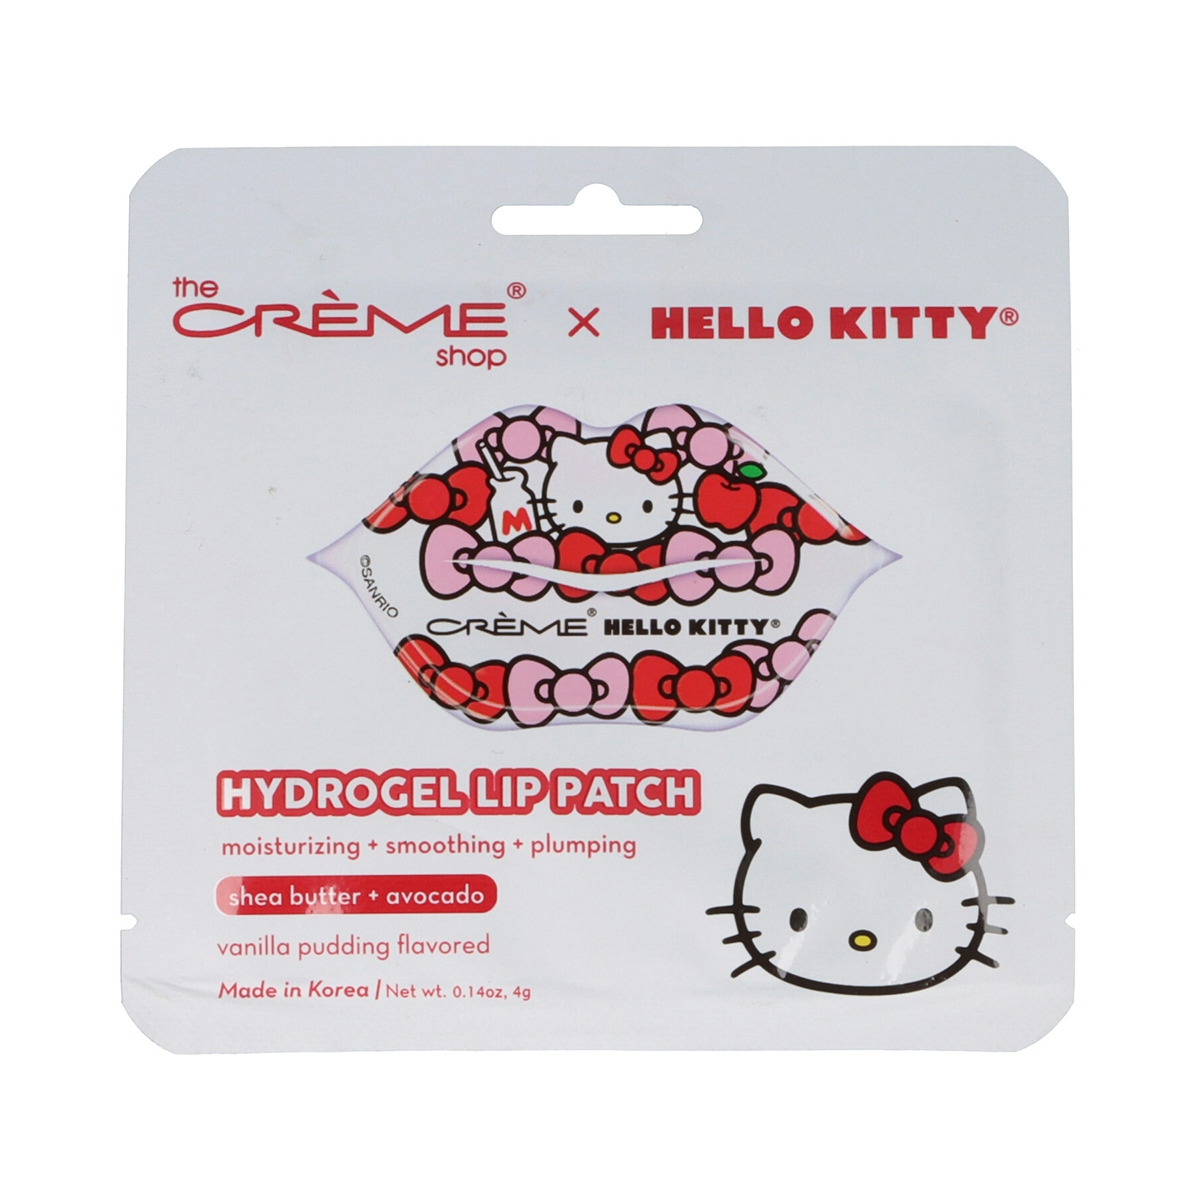 Mascarilla Labios Hello Kitty The Creme Shop 1 ud